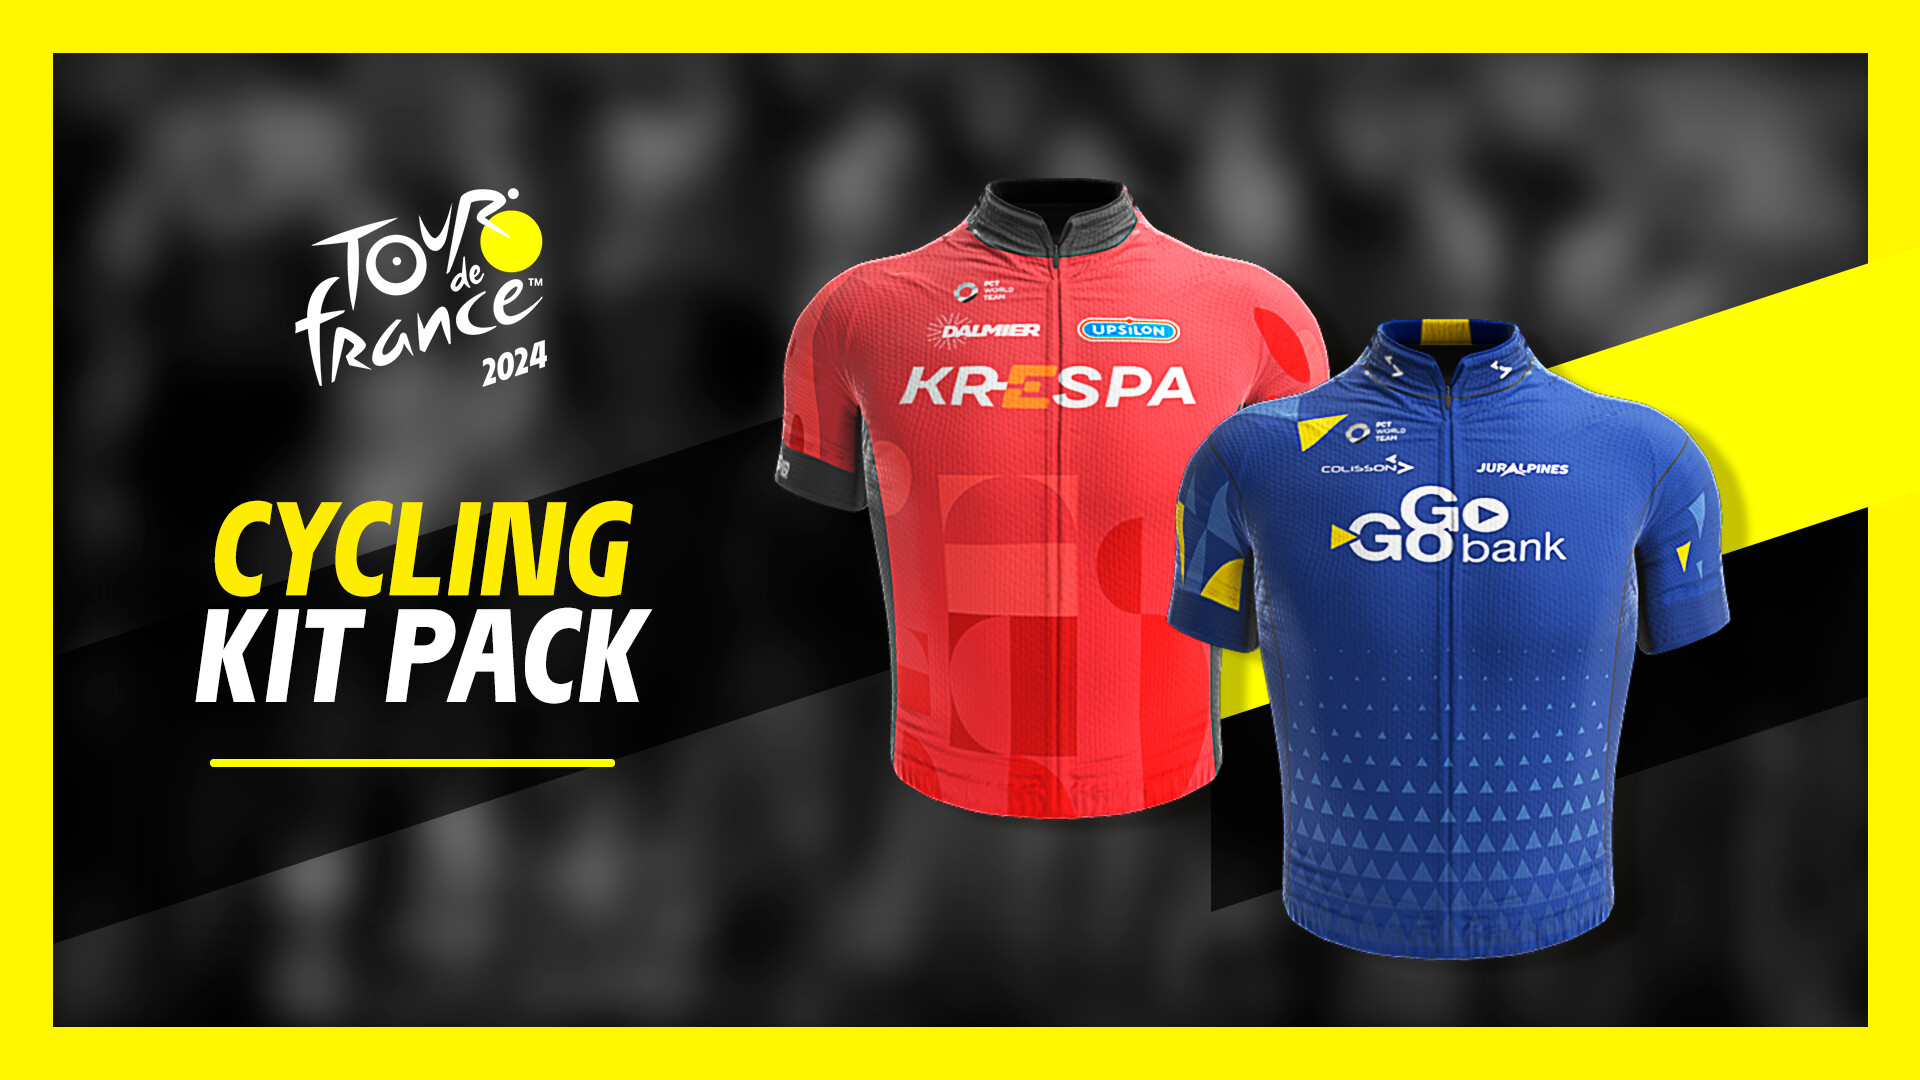 Tour de France 2024 - Cycling Kit Pack Featured Screenshot #1